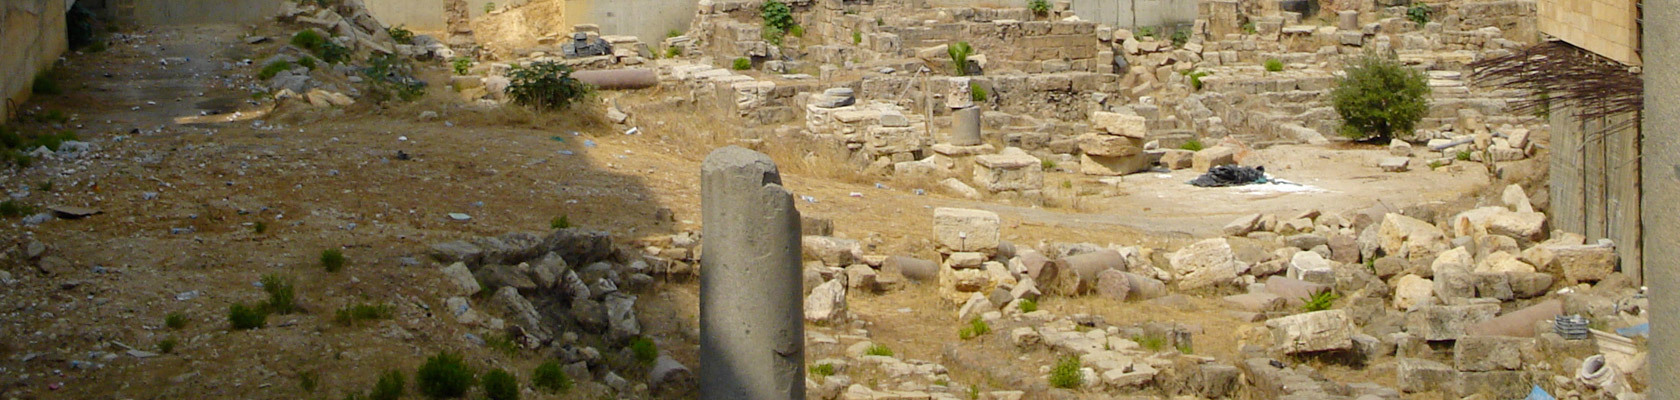 The Roman Hippodrome of Beirut